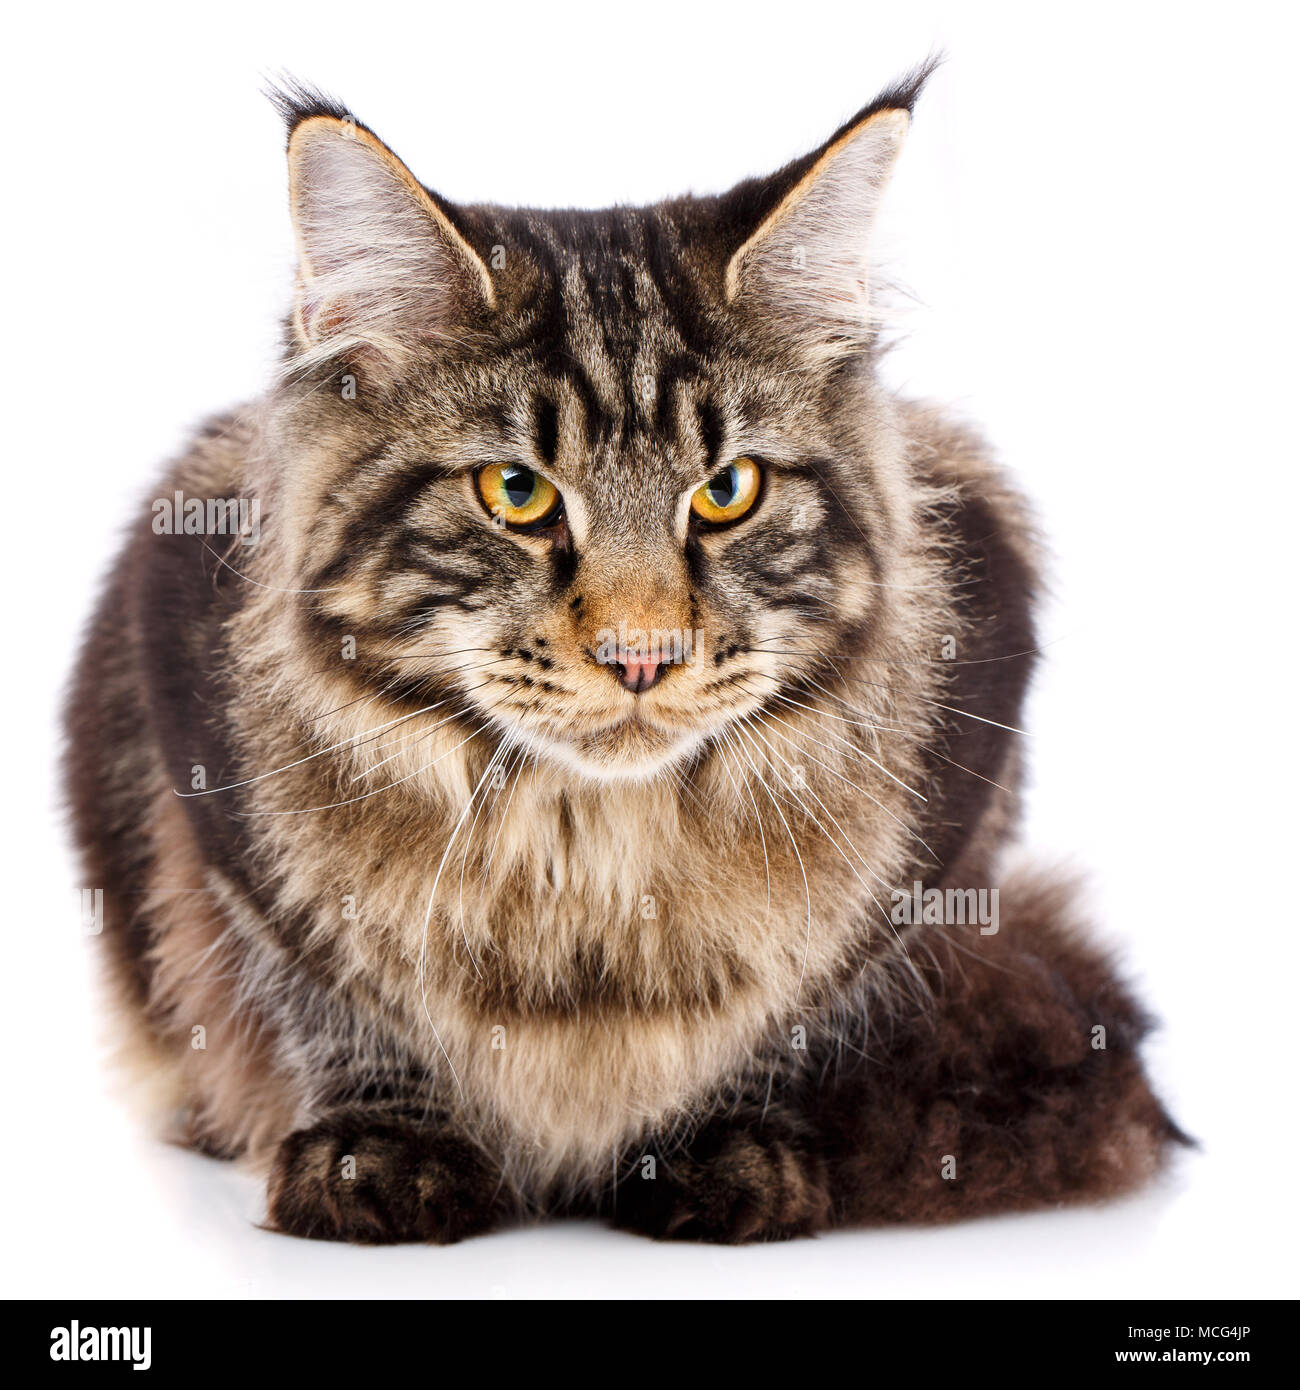 Tier, Cat, pet-Konzept - mainecoon Stockfoto